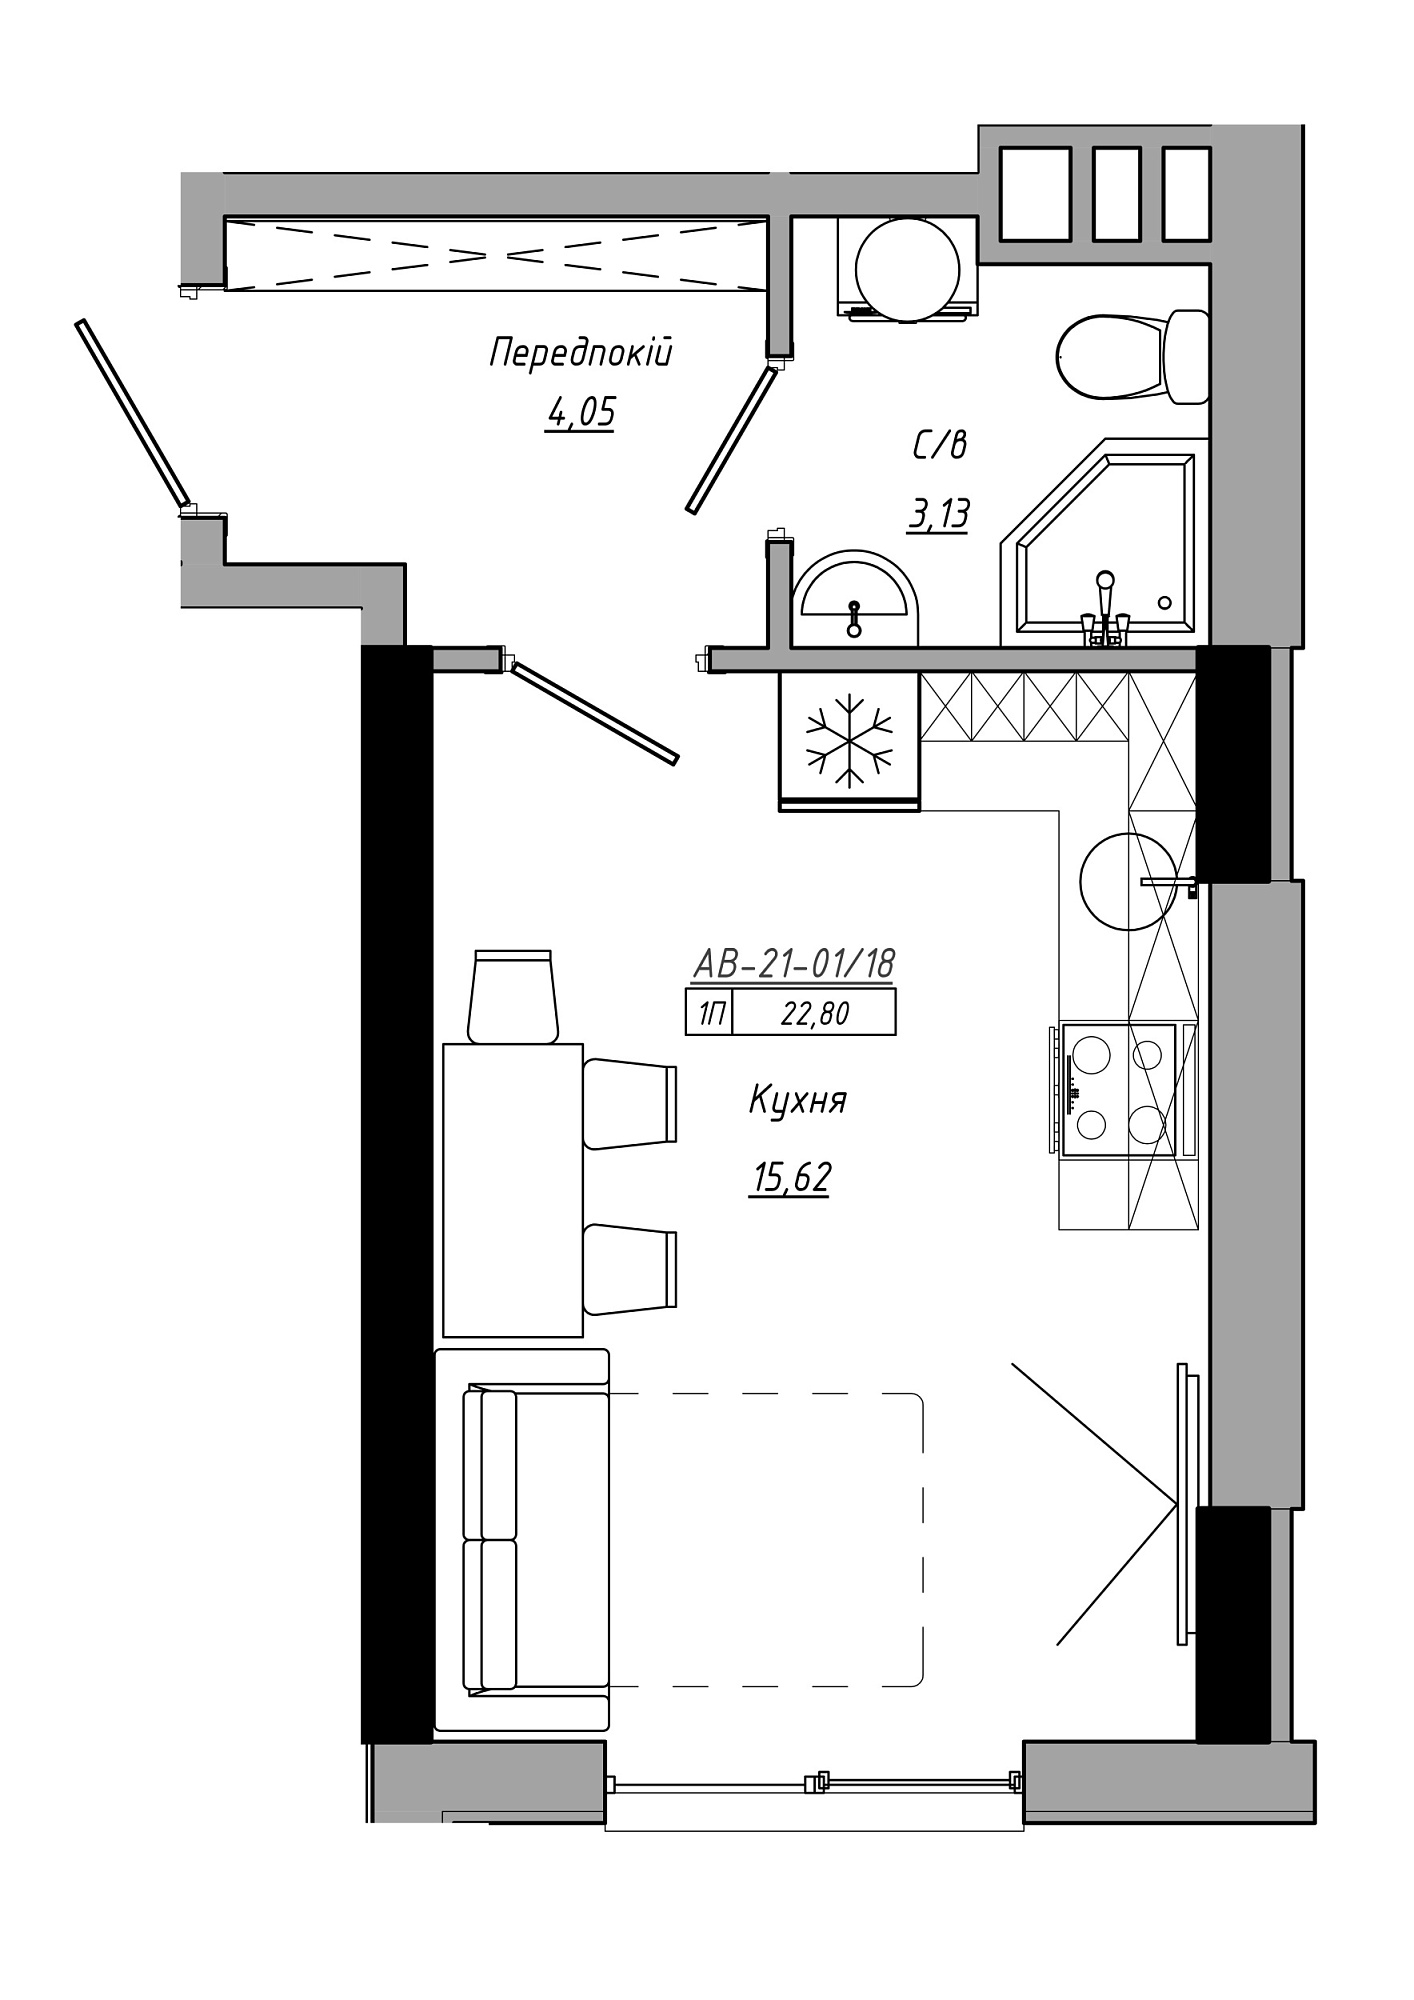 Planning Smart flats area 22.8m2, AB-21-01/00018.